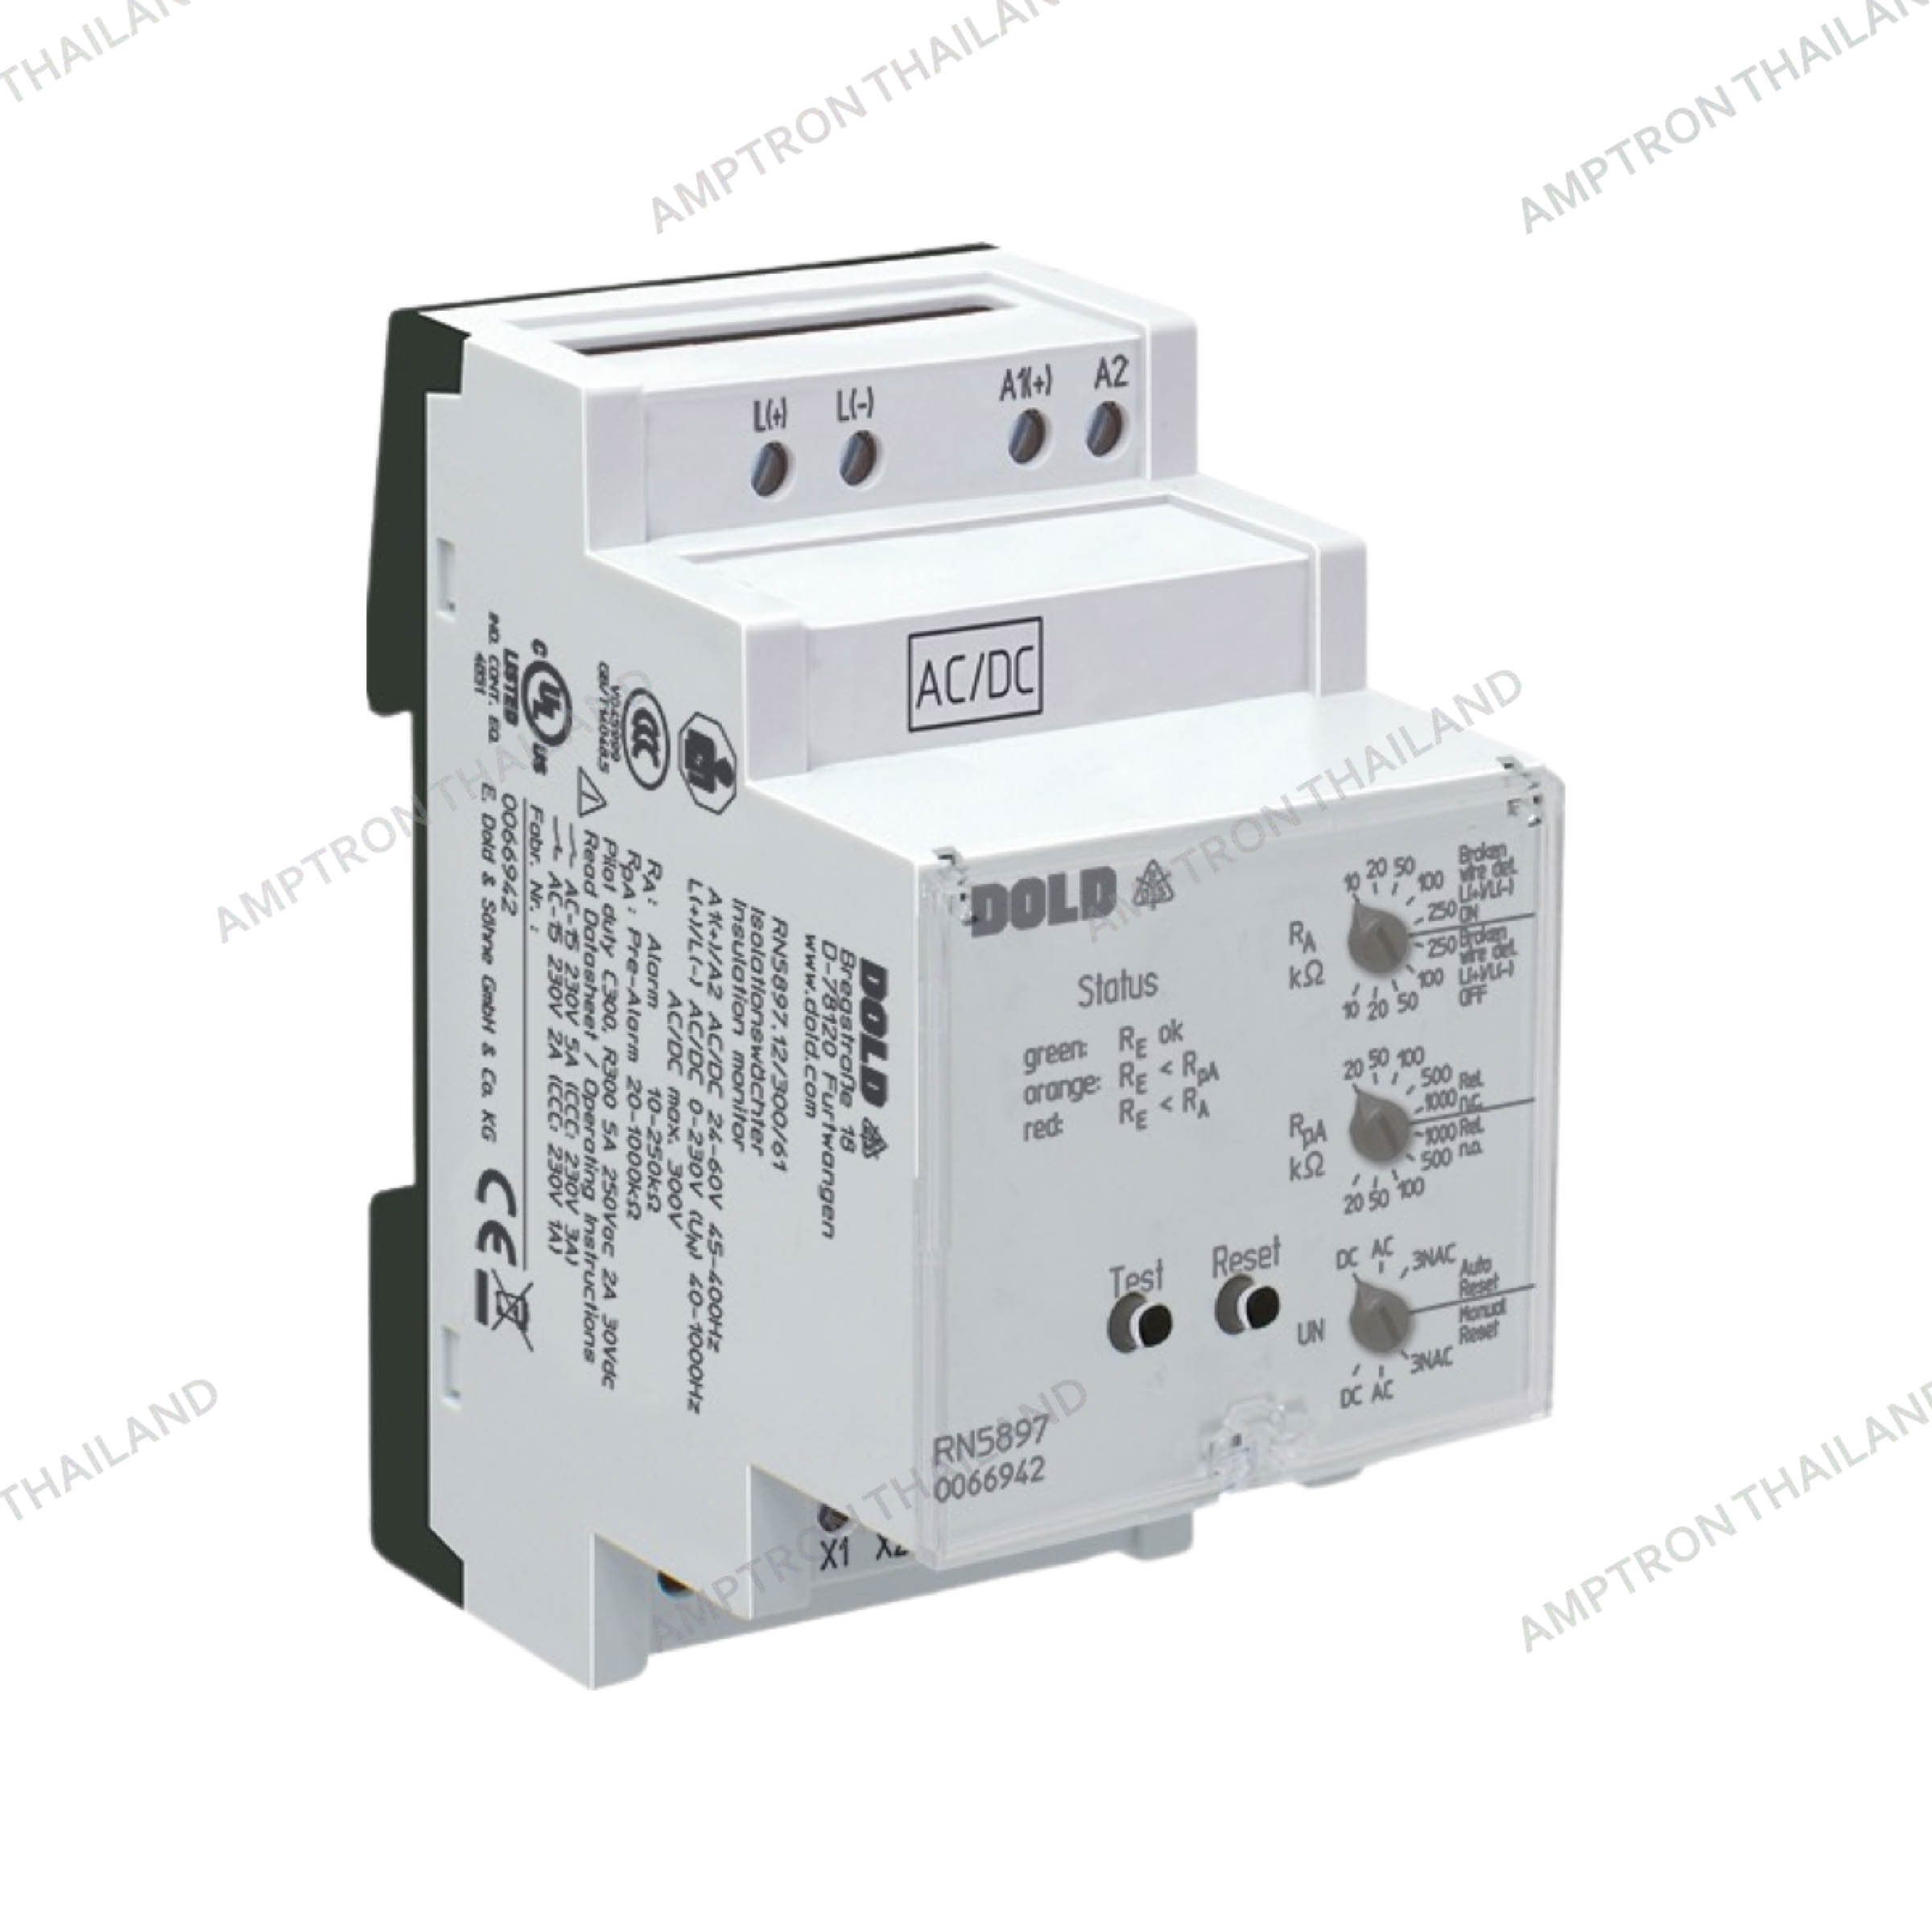 RN 5897/300 VARIMETER IMD Insulation monitor